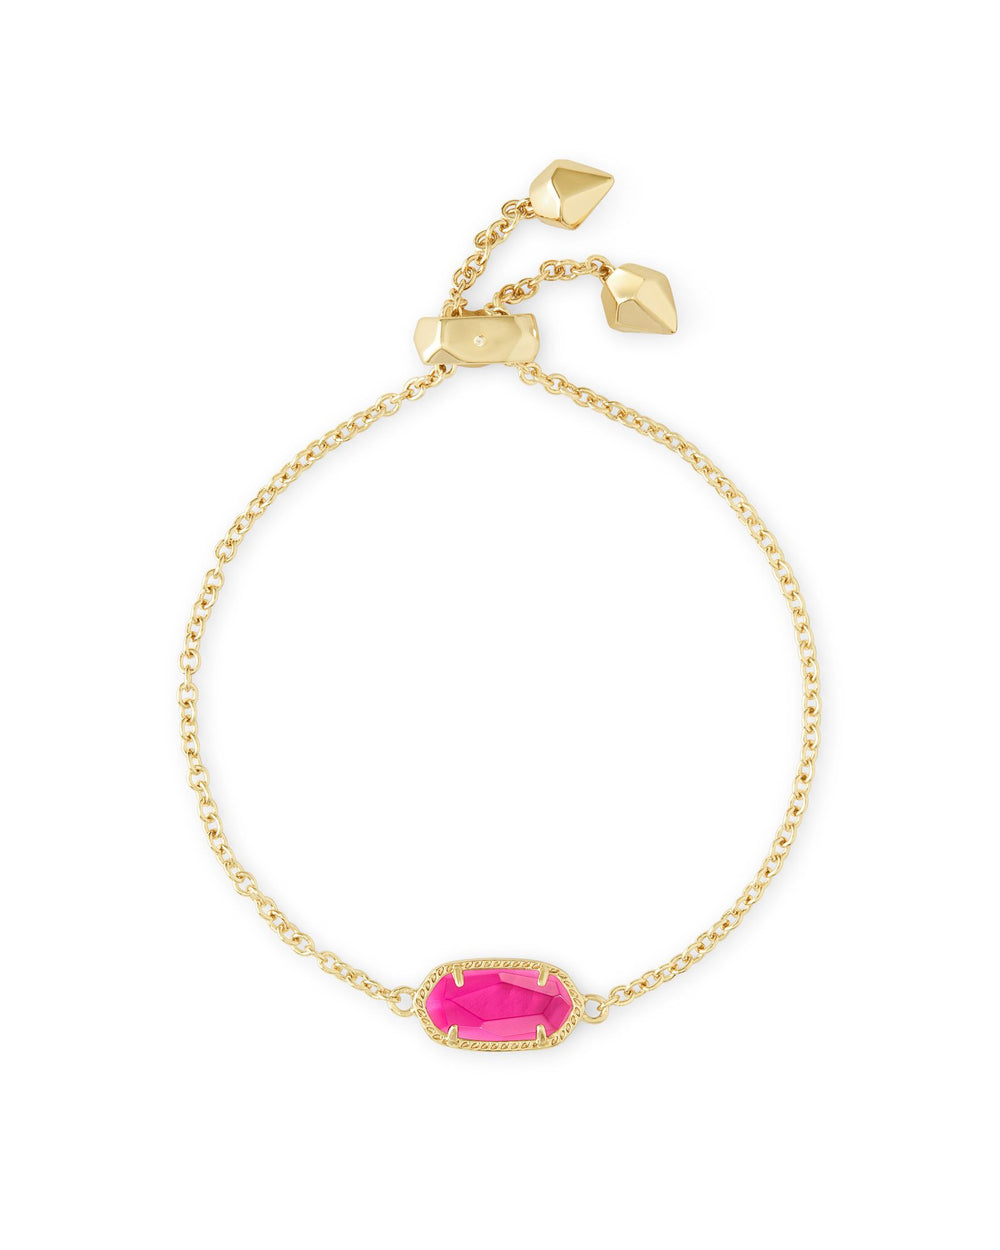 Elaina Gold Adjustable Chain Bracelet in Azalea